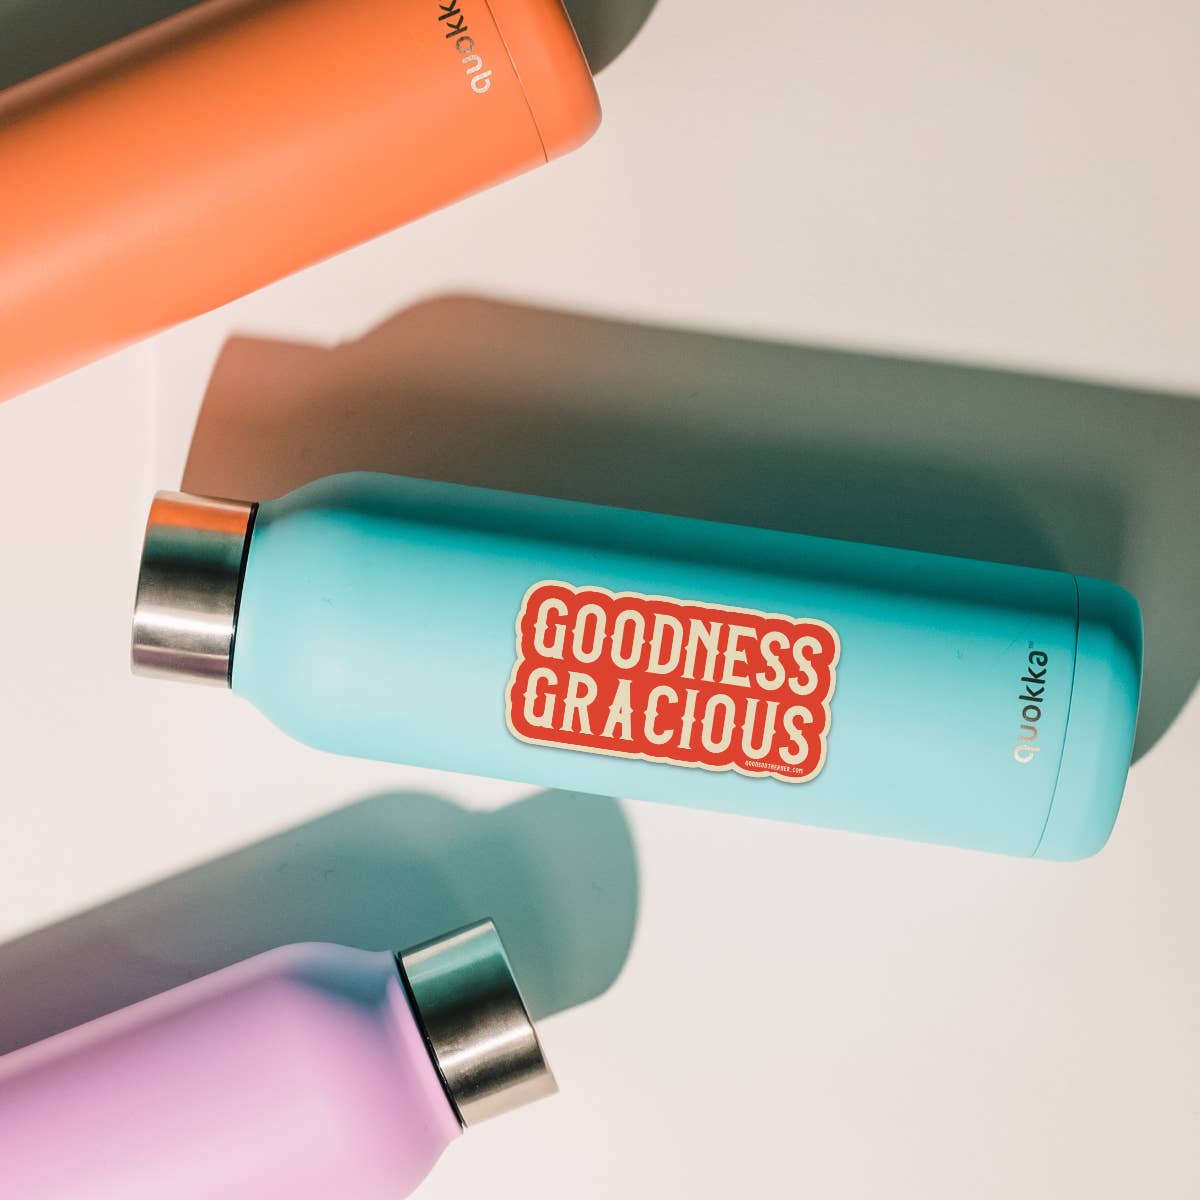 "Goodness Gracious" Sticker